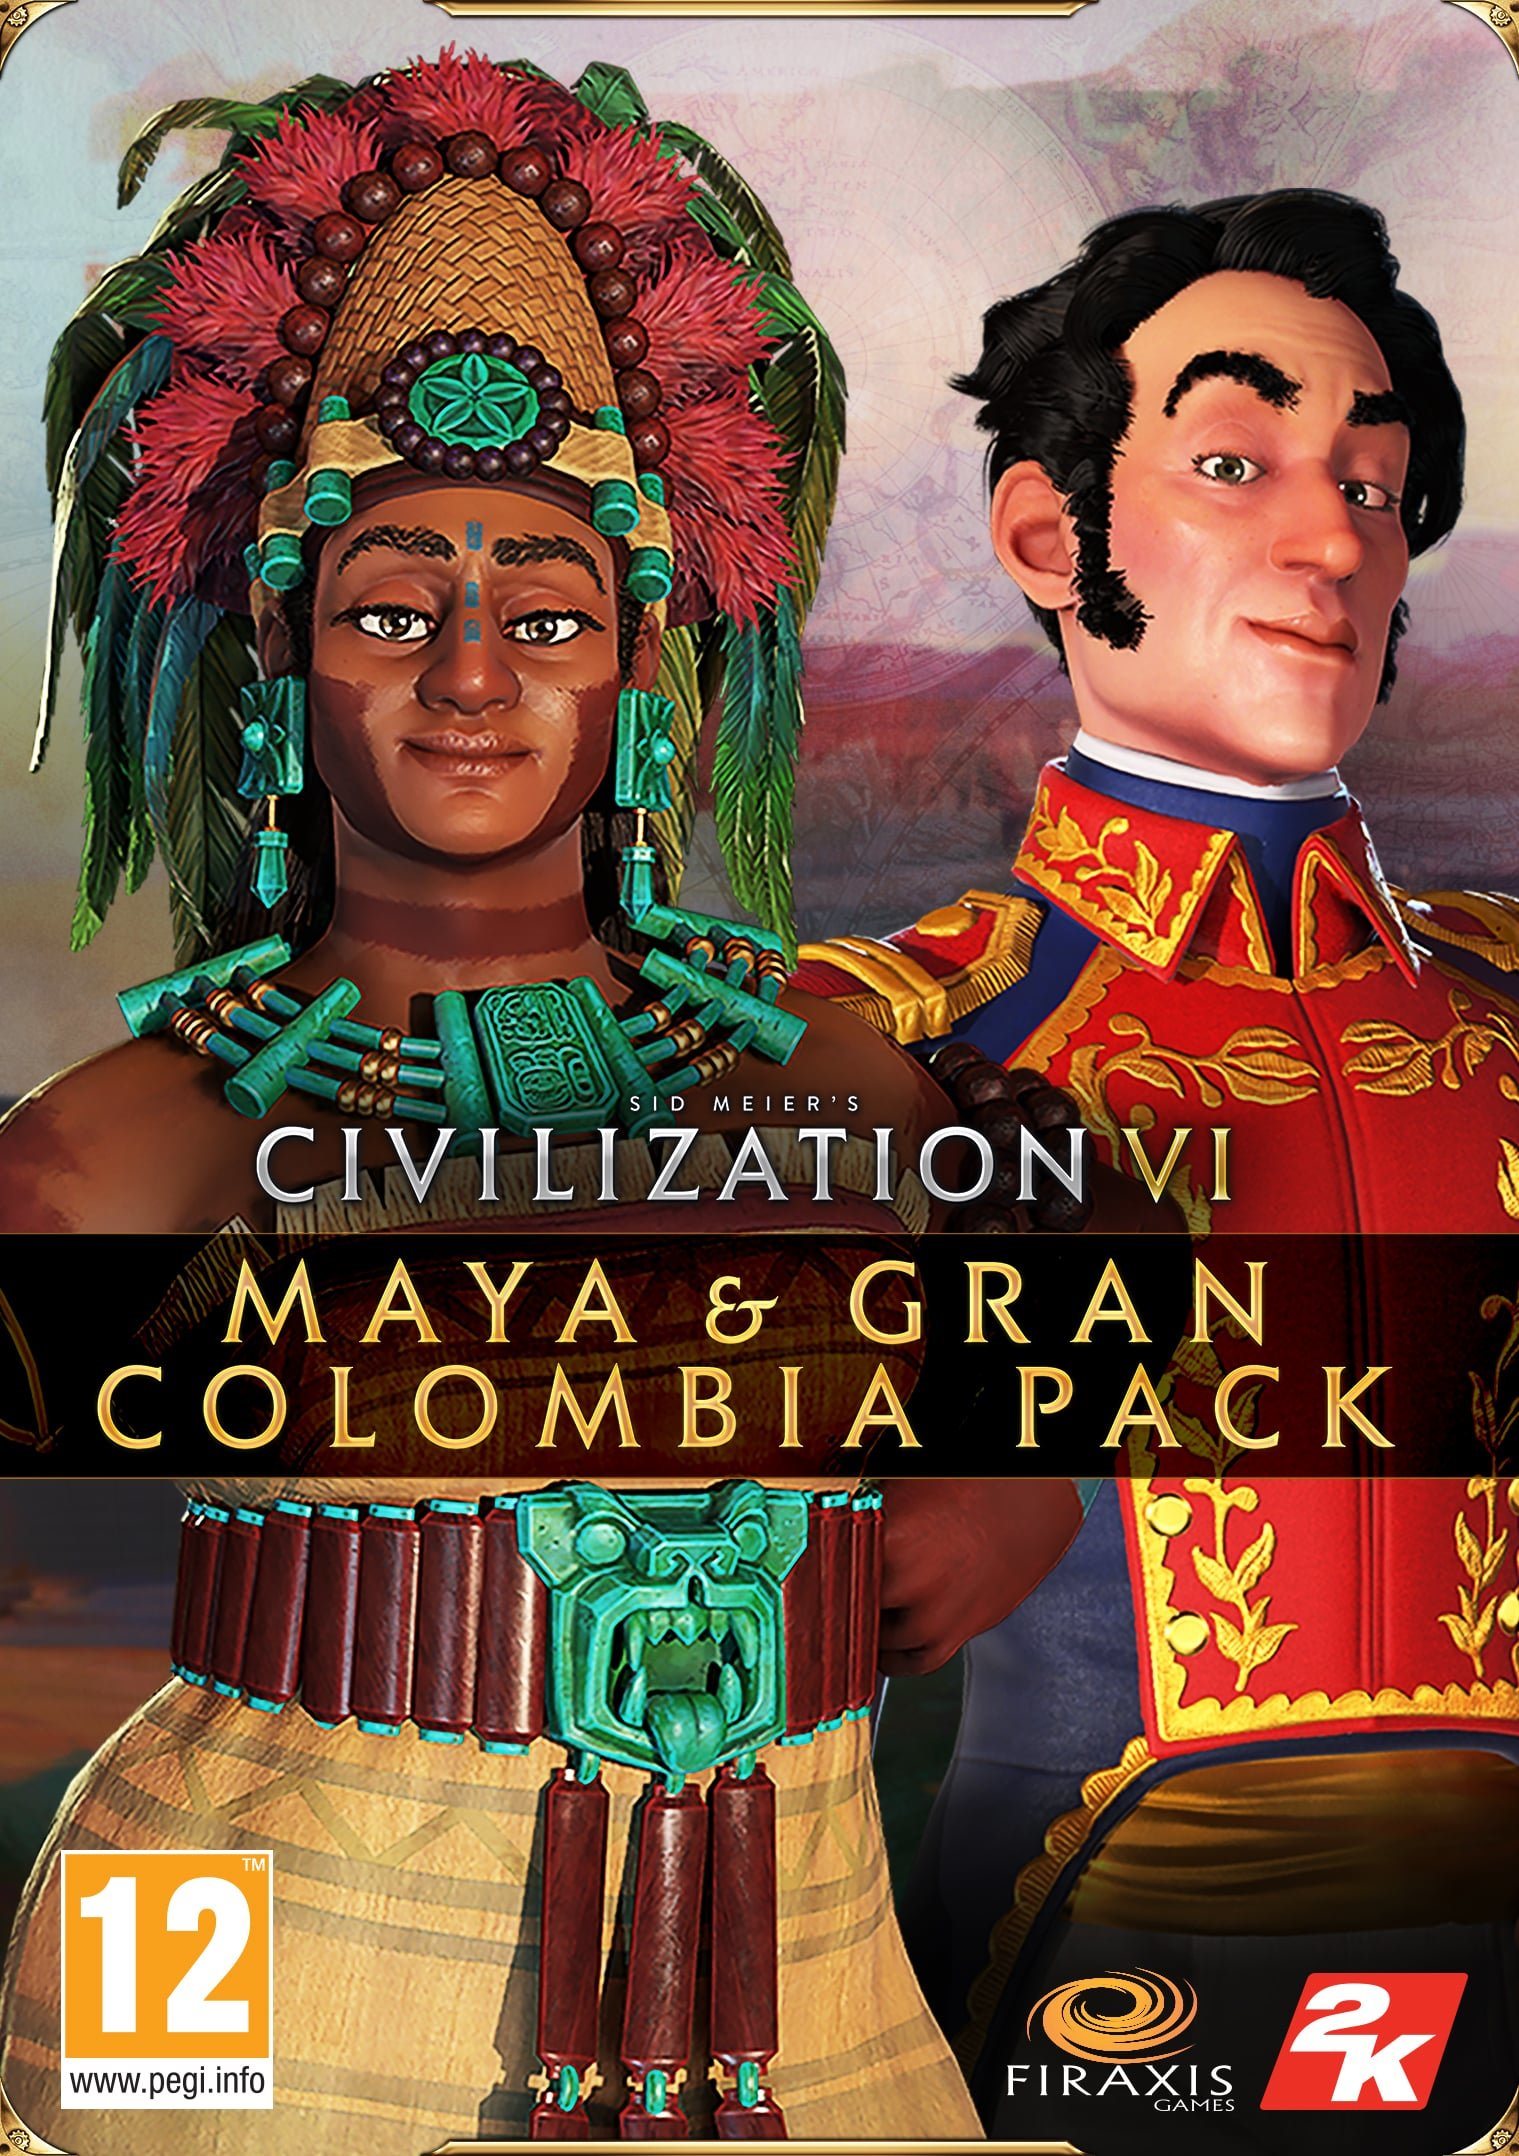 Videójáték kiegészítő Civilization VI - Maya & Gran Colombia Pack - PC DIGITAL